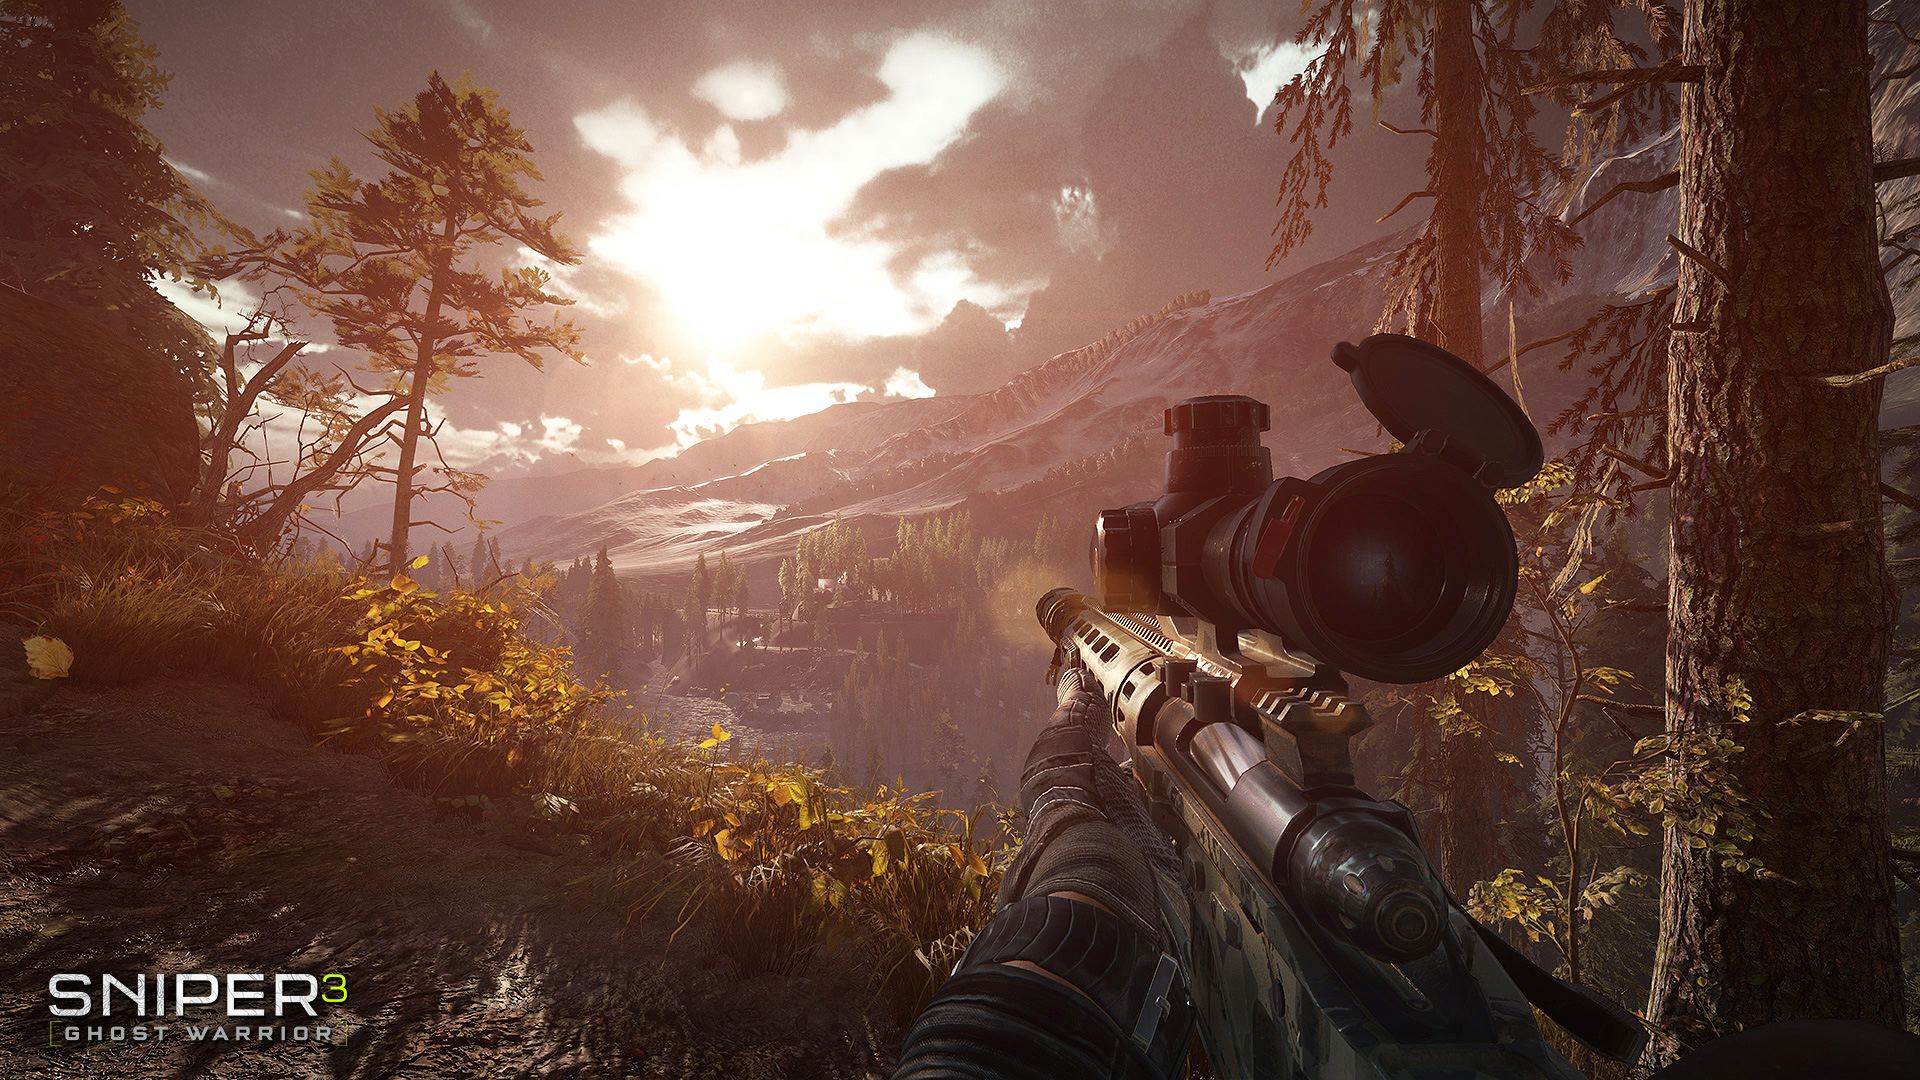 Sniper Ghost Warrior 3 shown at E3 2015